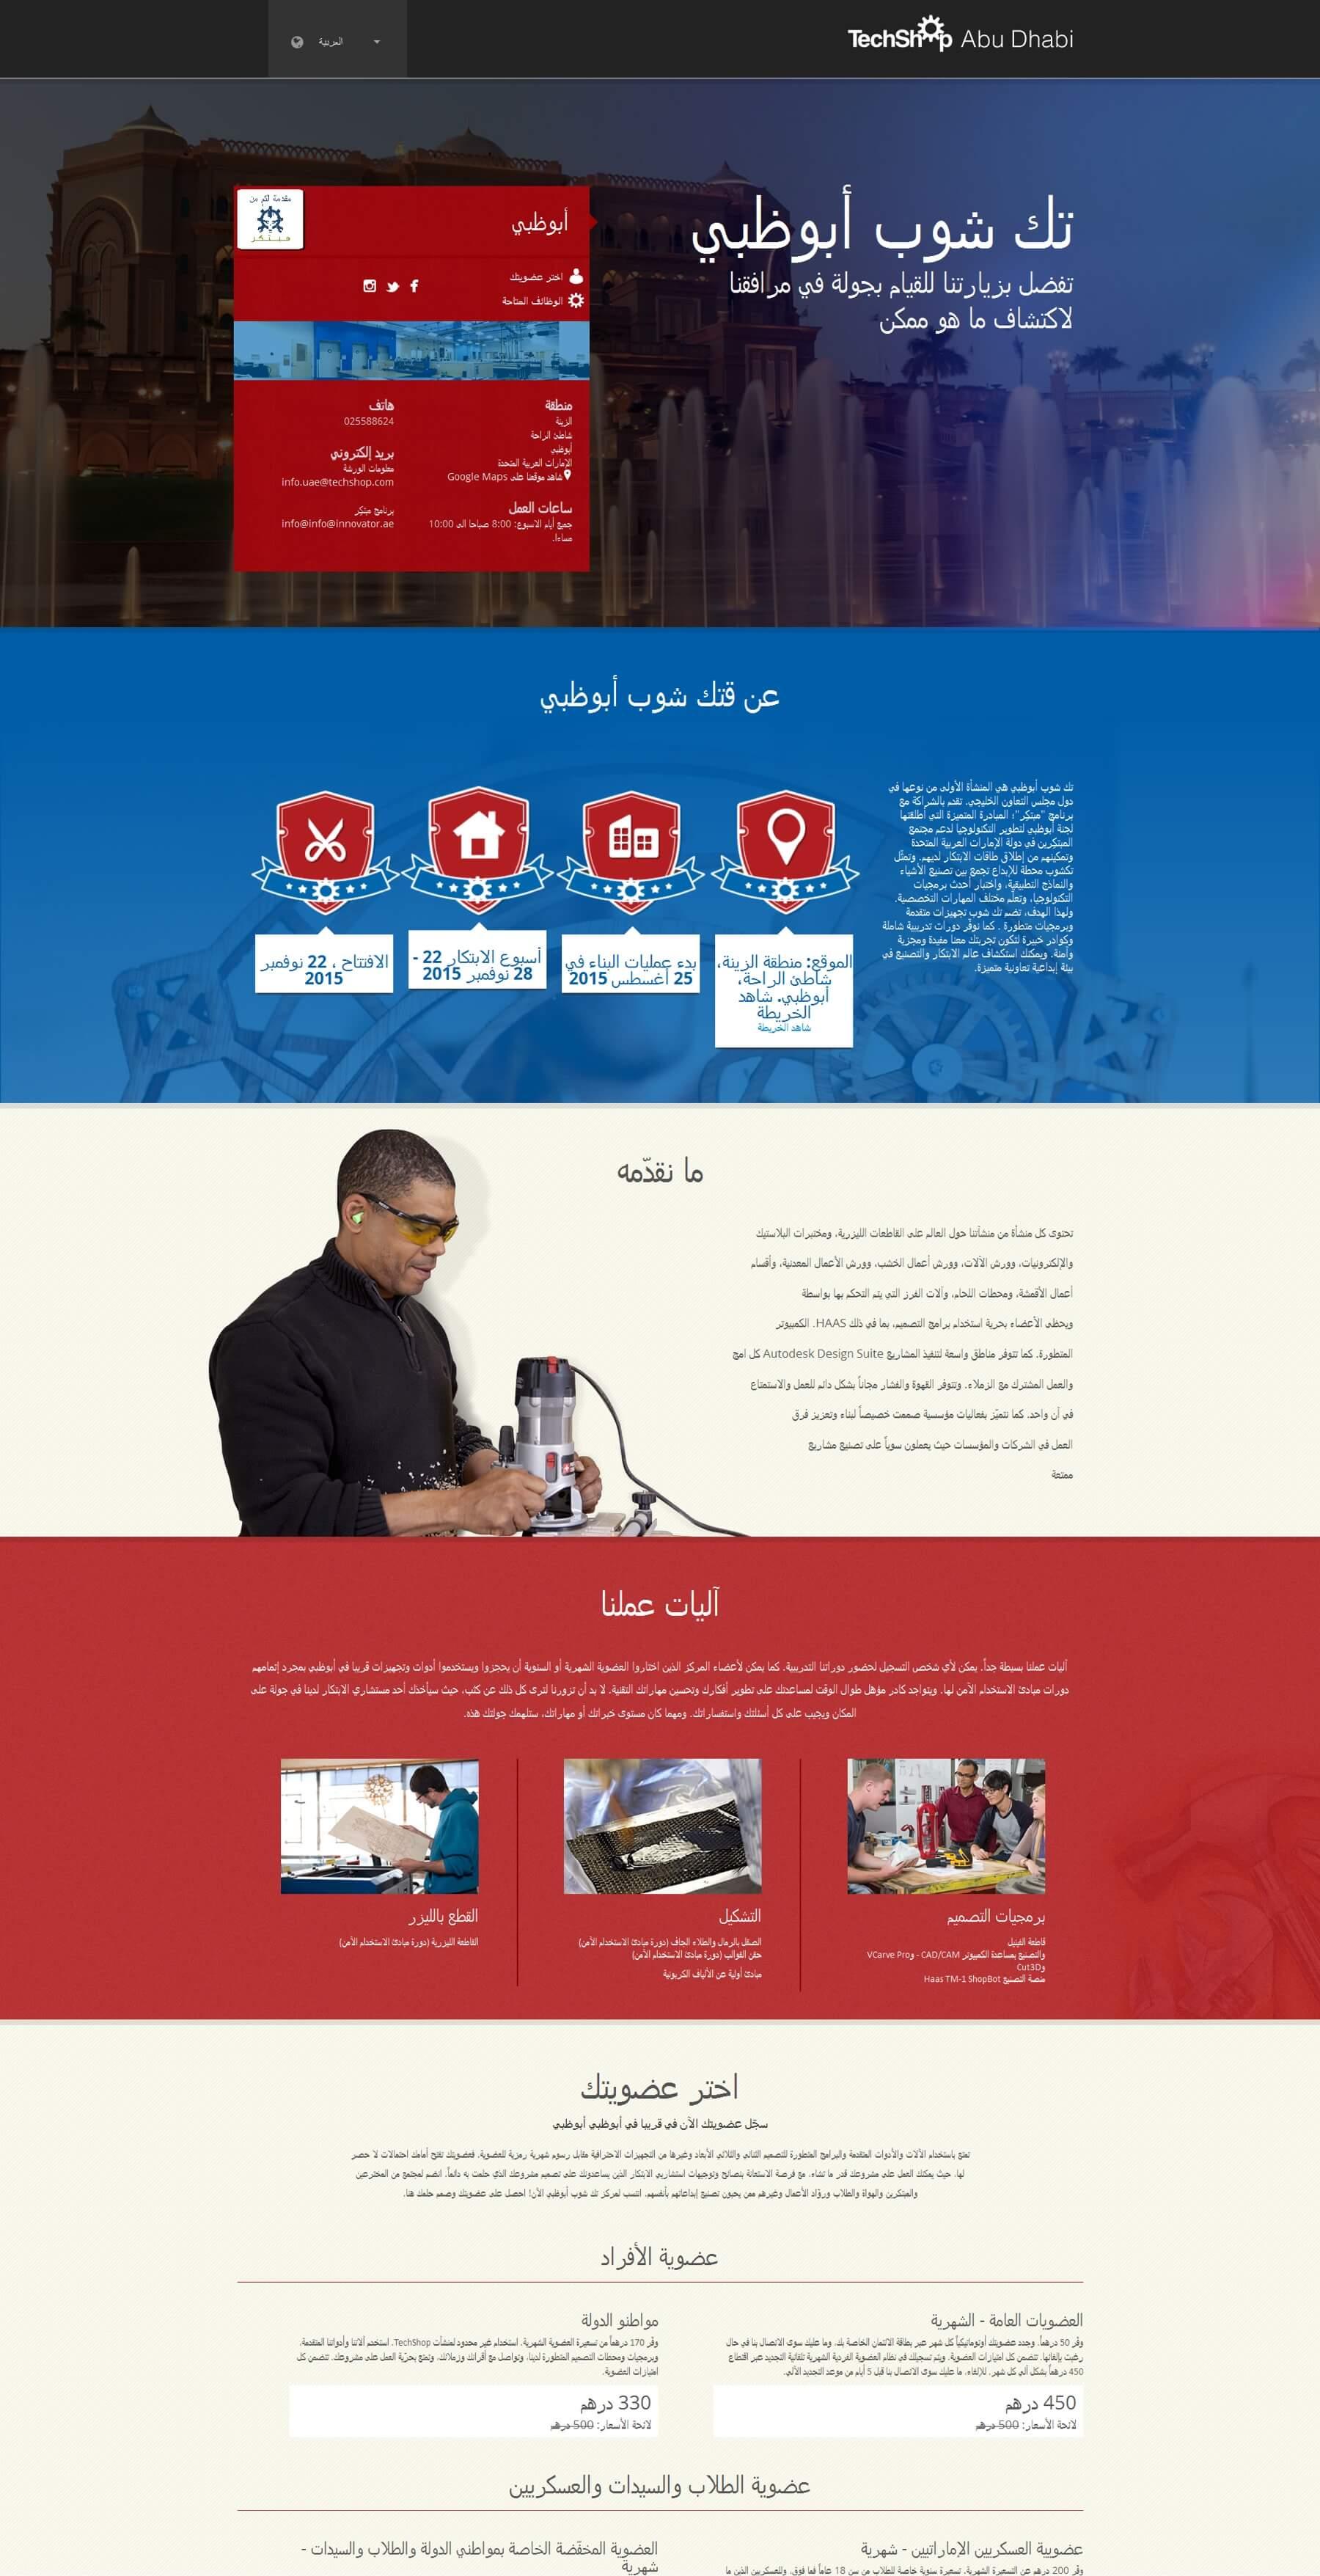 A desktop screenshot of the TechShop Abu Dhabi homepage